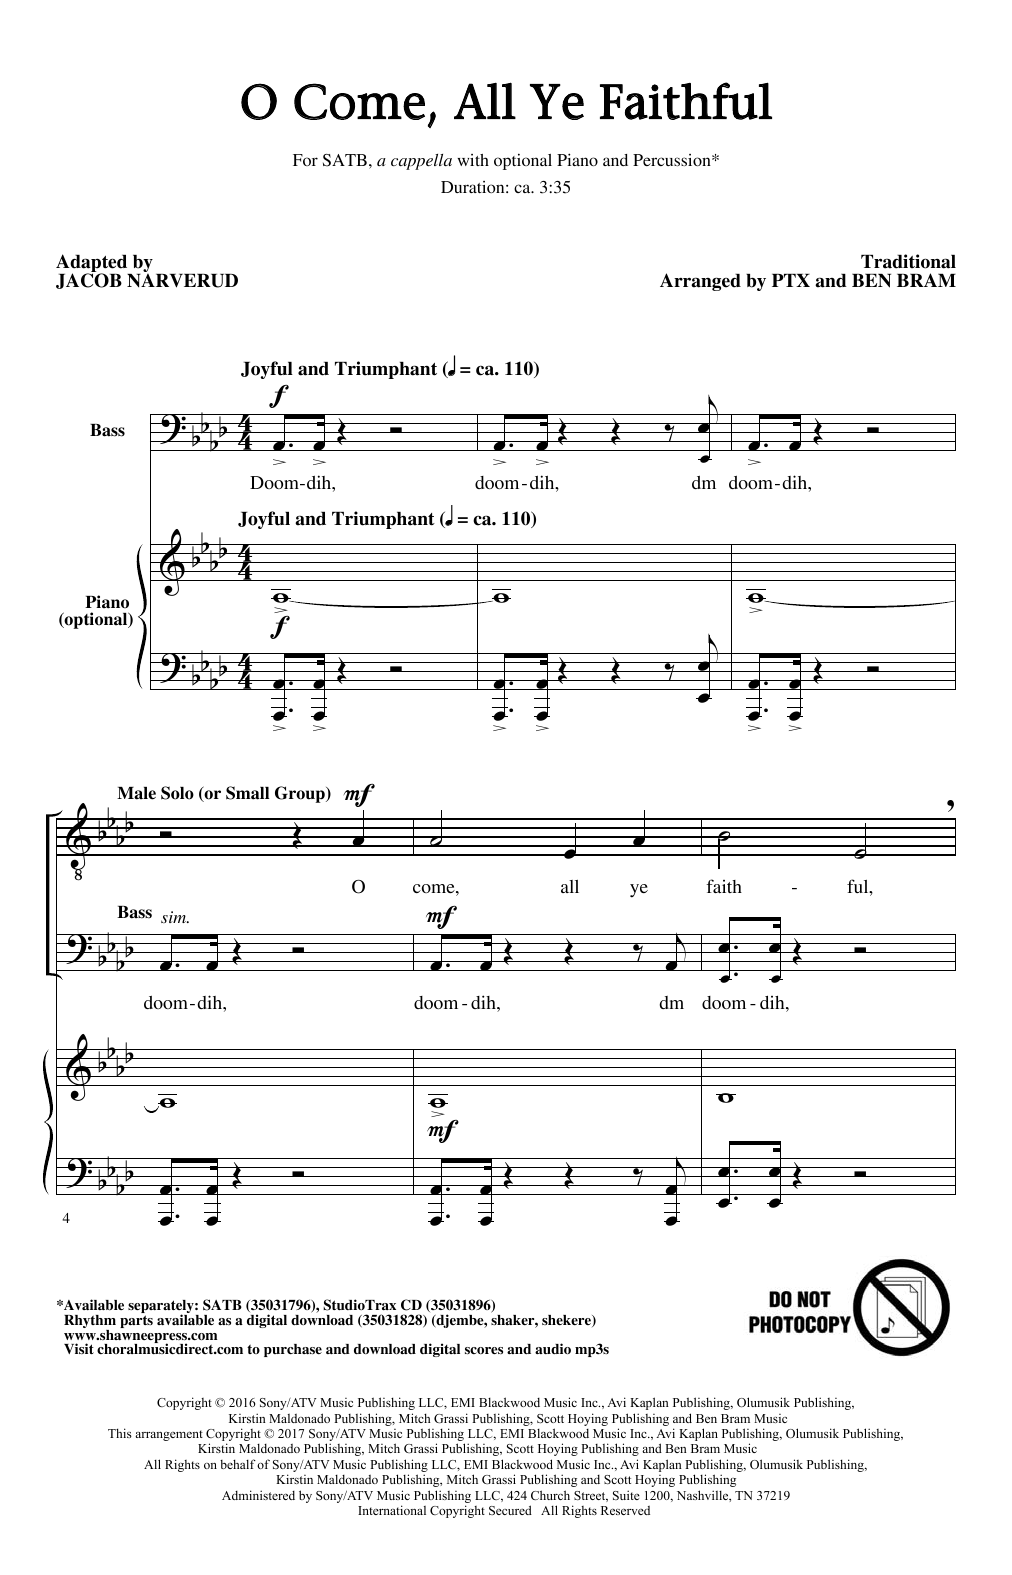 Pentatonix O Come, All Ye Faithful (arr. Jacob Narverud) sheet music notes and chords arranged for SATB Choir